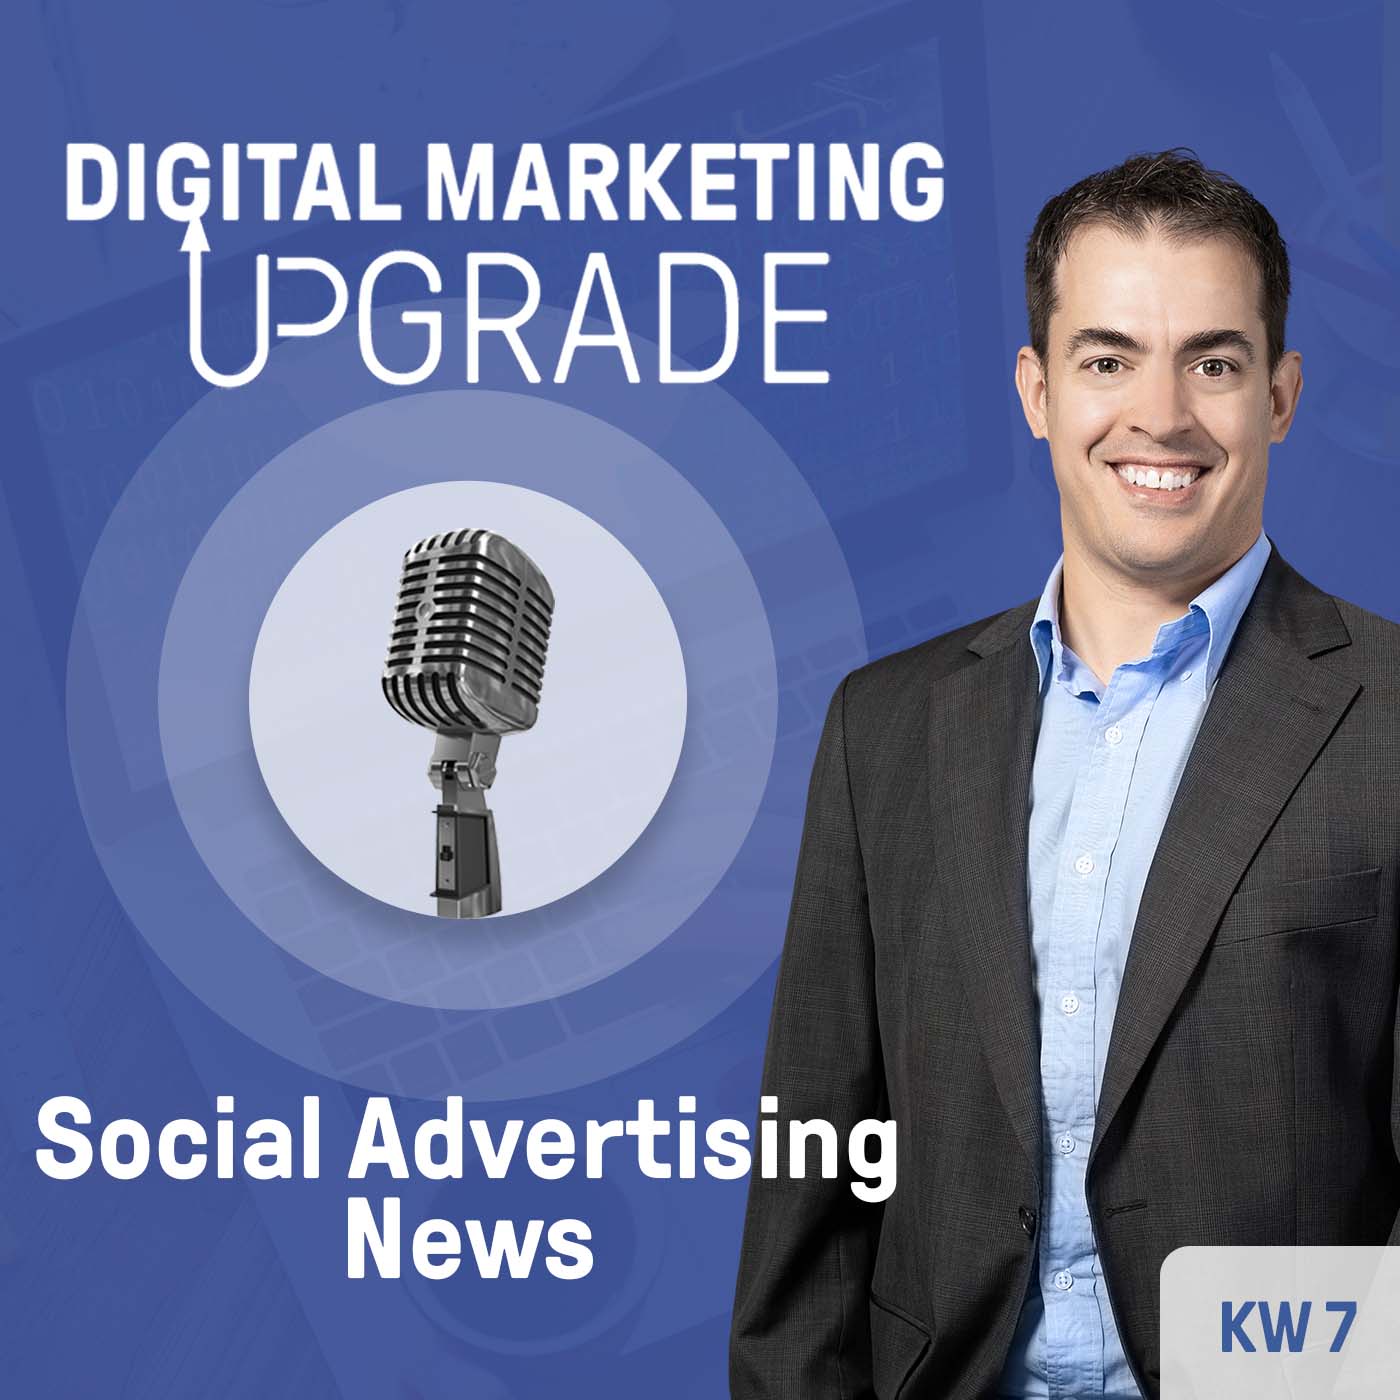 Social Advertising News - KW 7/23